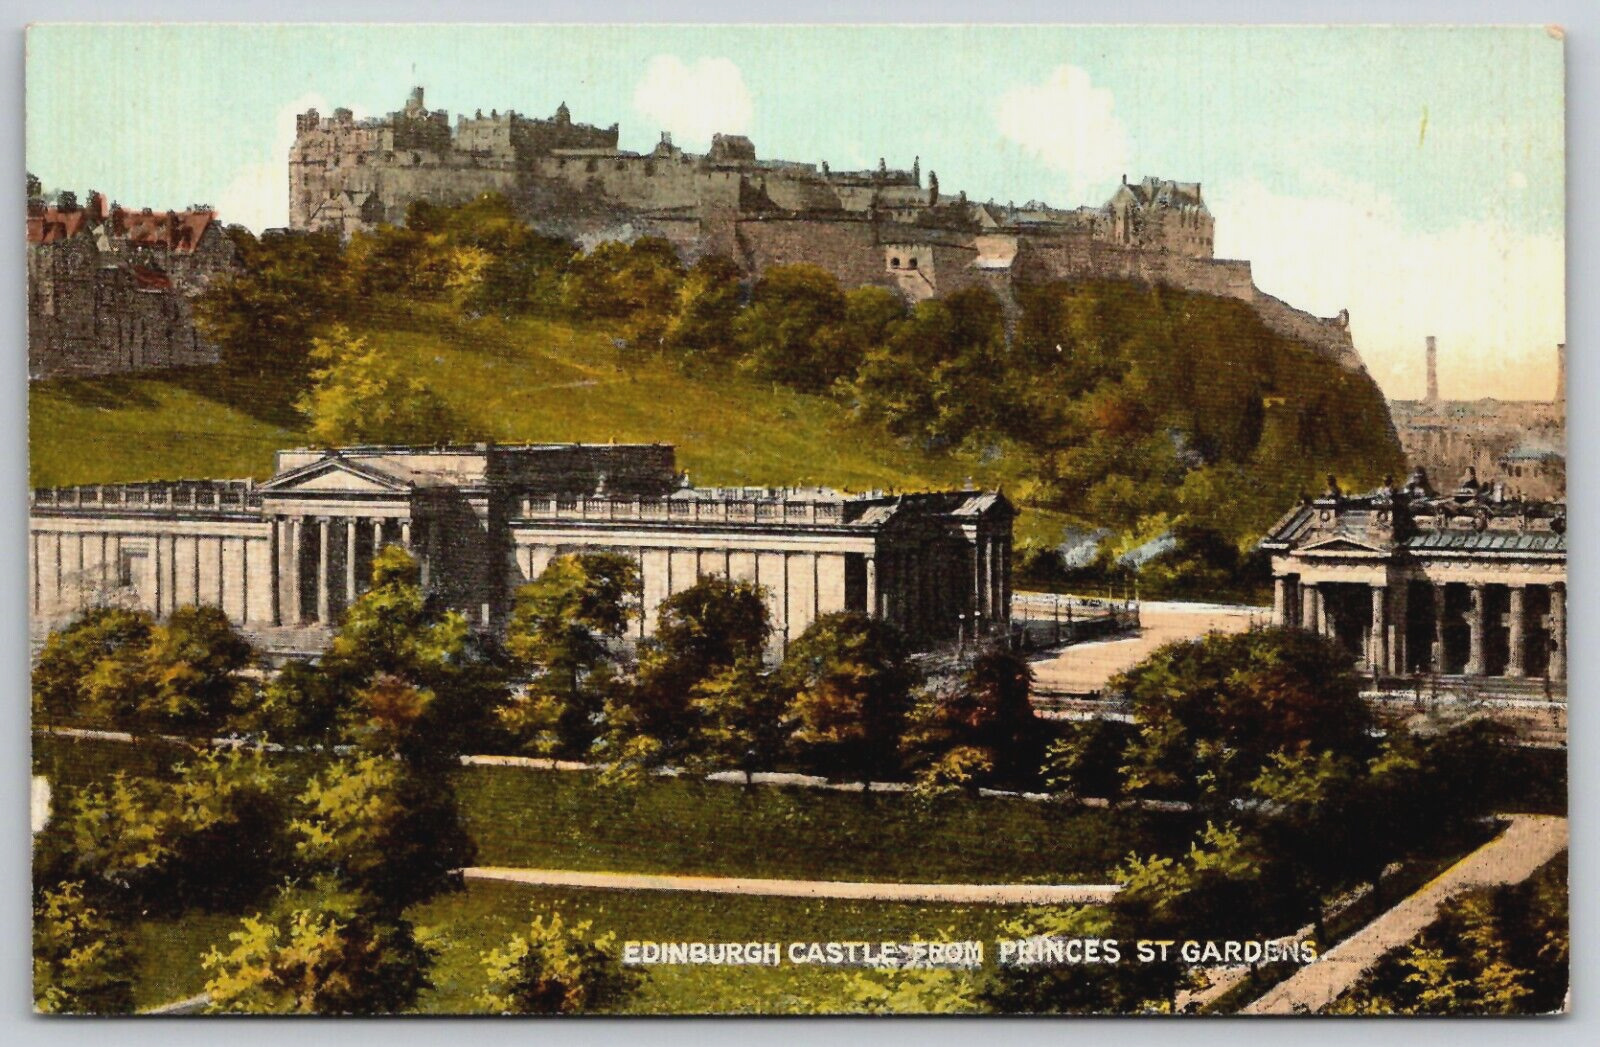 Vintage Postcard - Edinburgh Castle from Princes St Gardens - Scotland